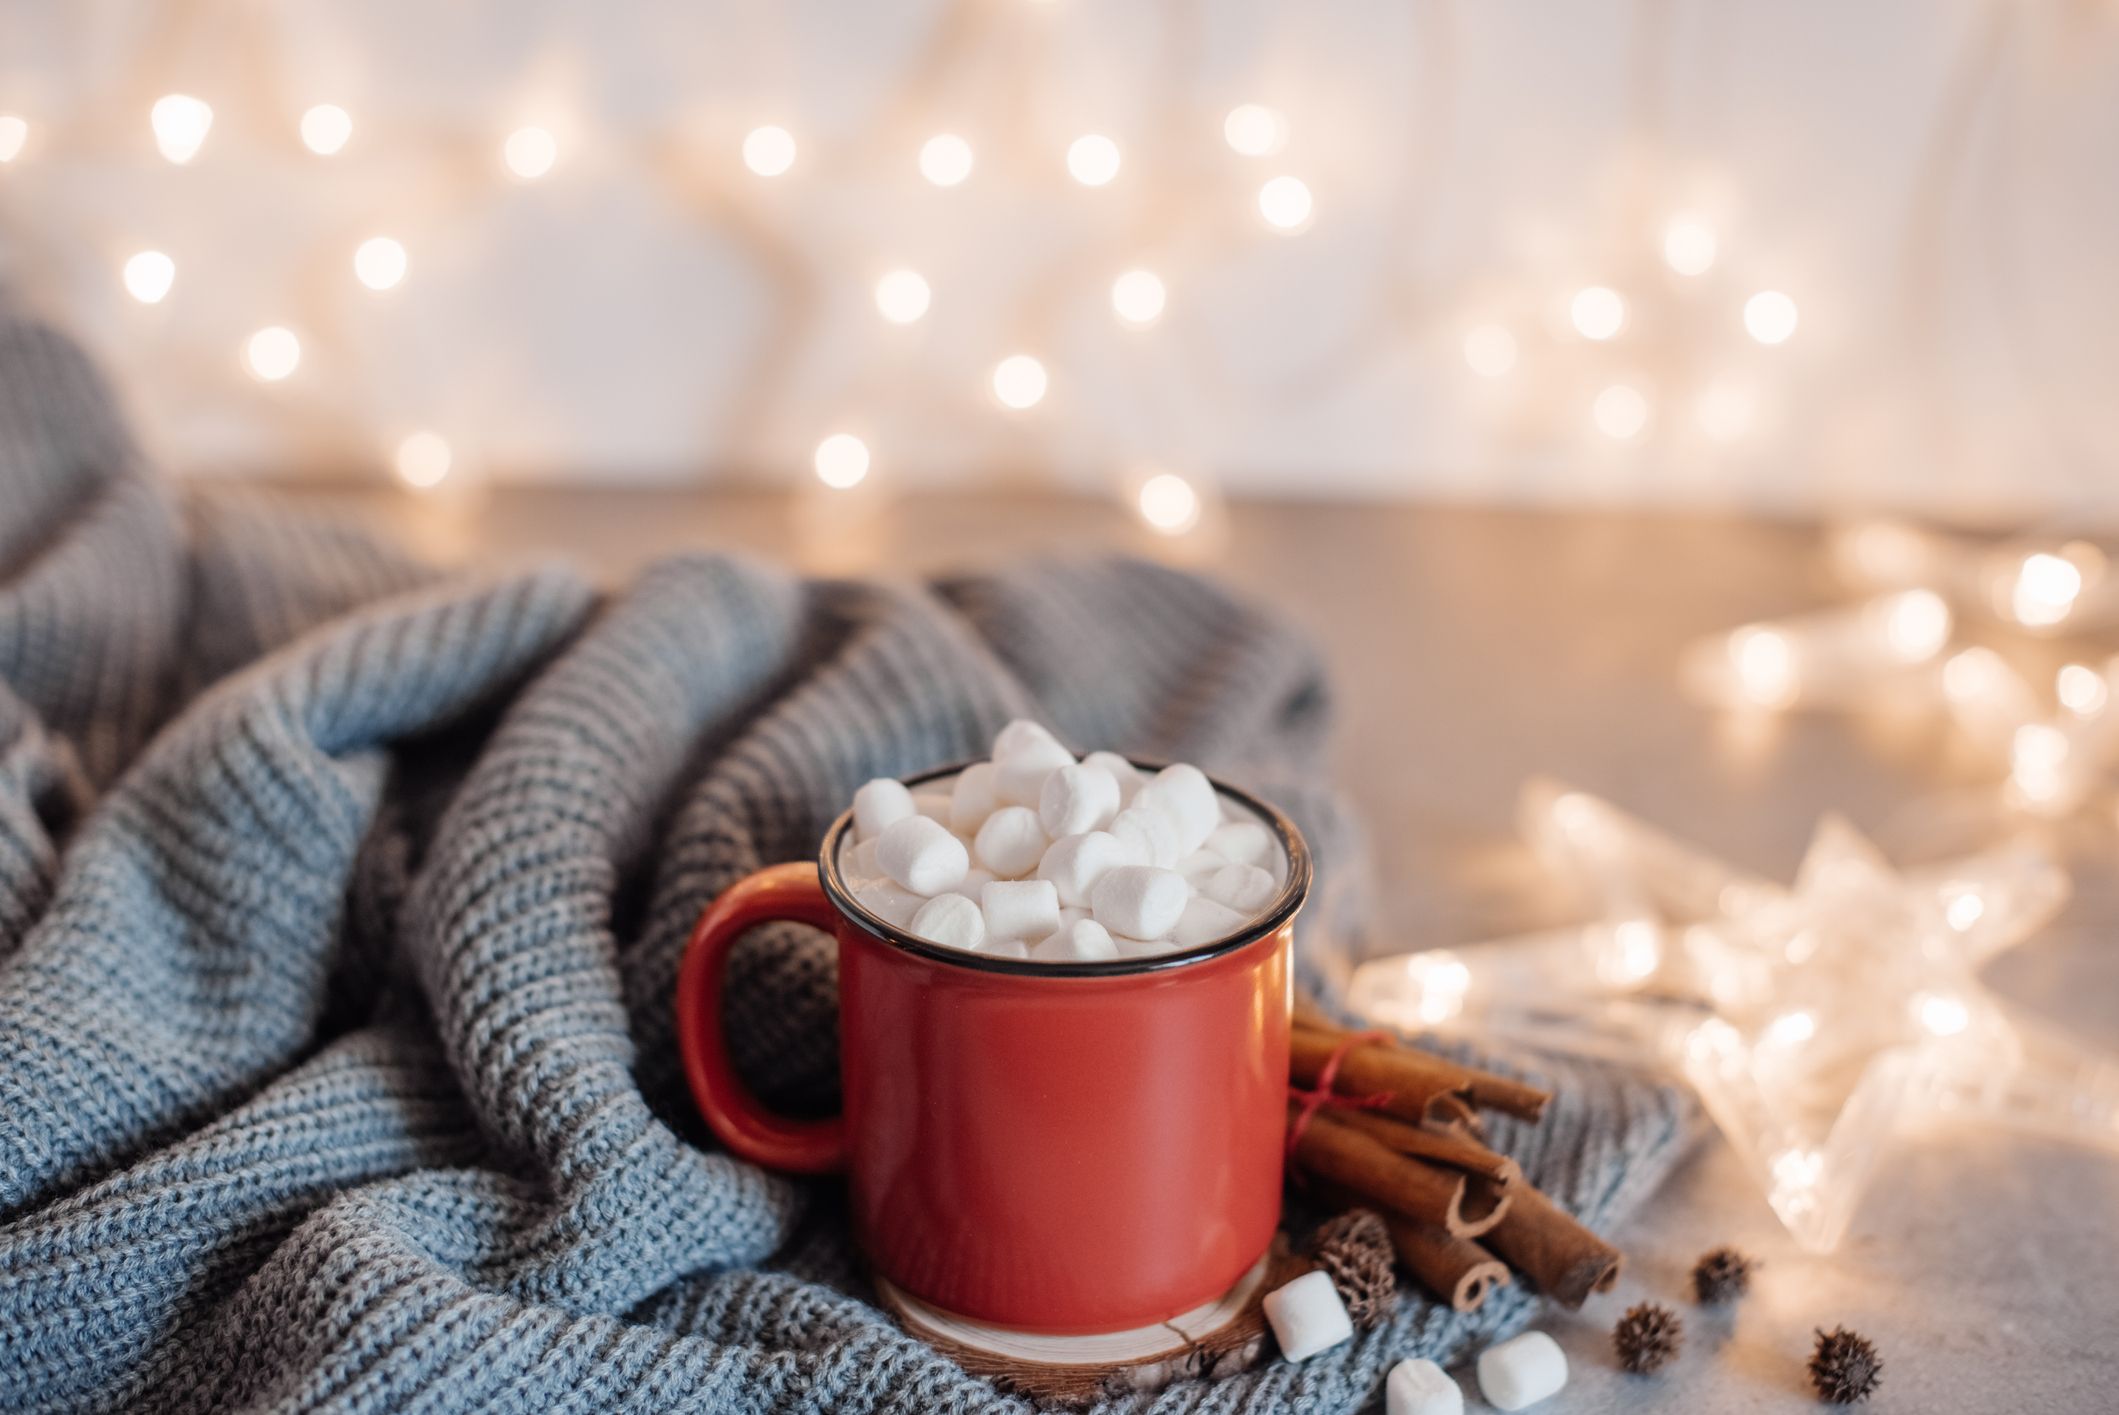 11 Best Hot Chocolate Mixes to Buy in 2022